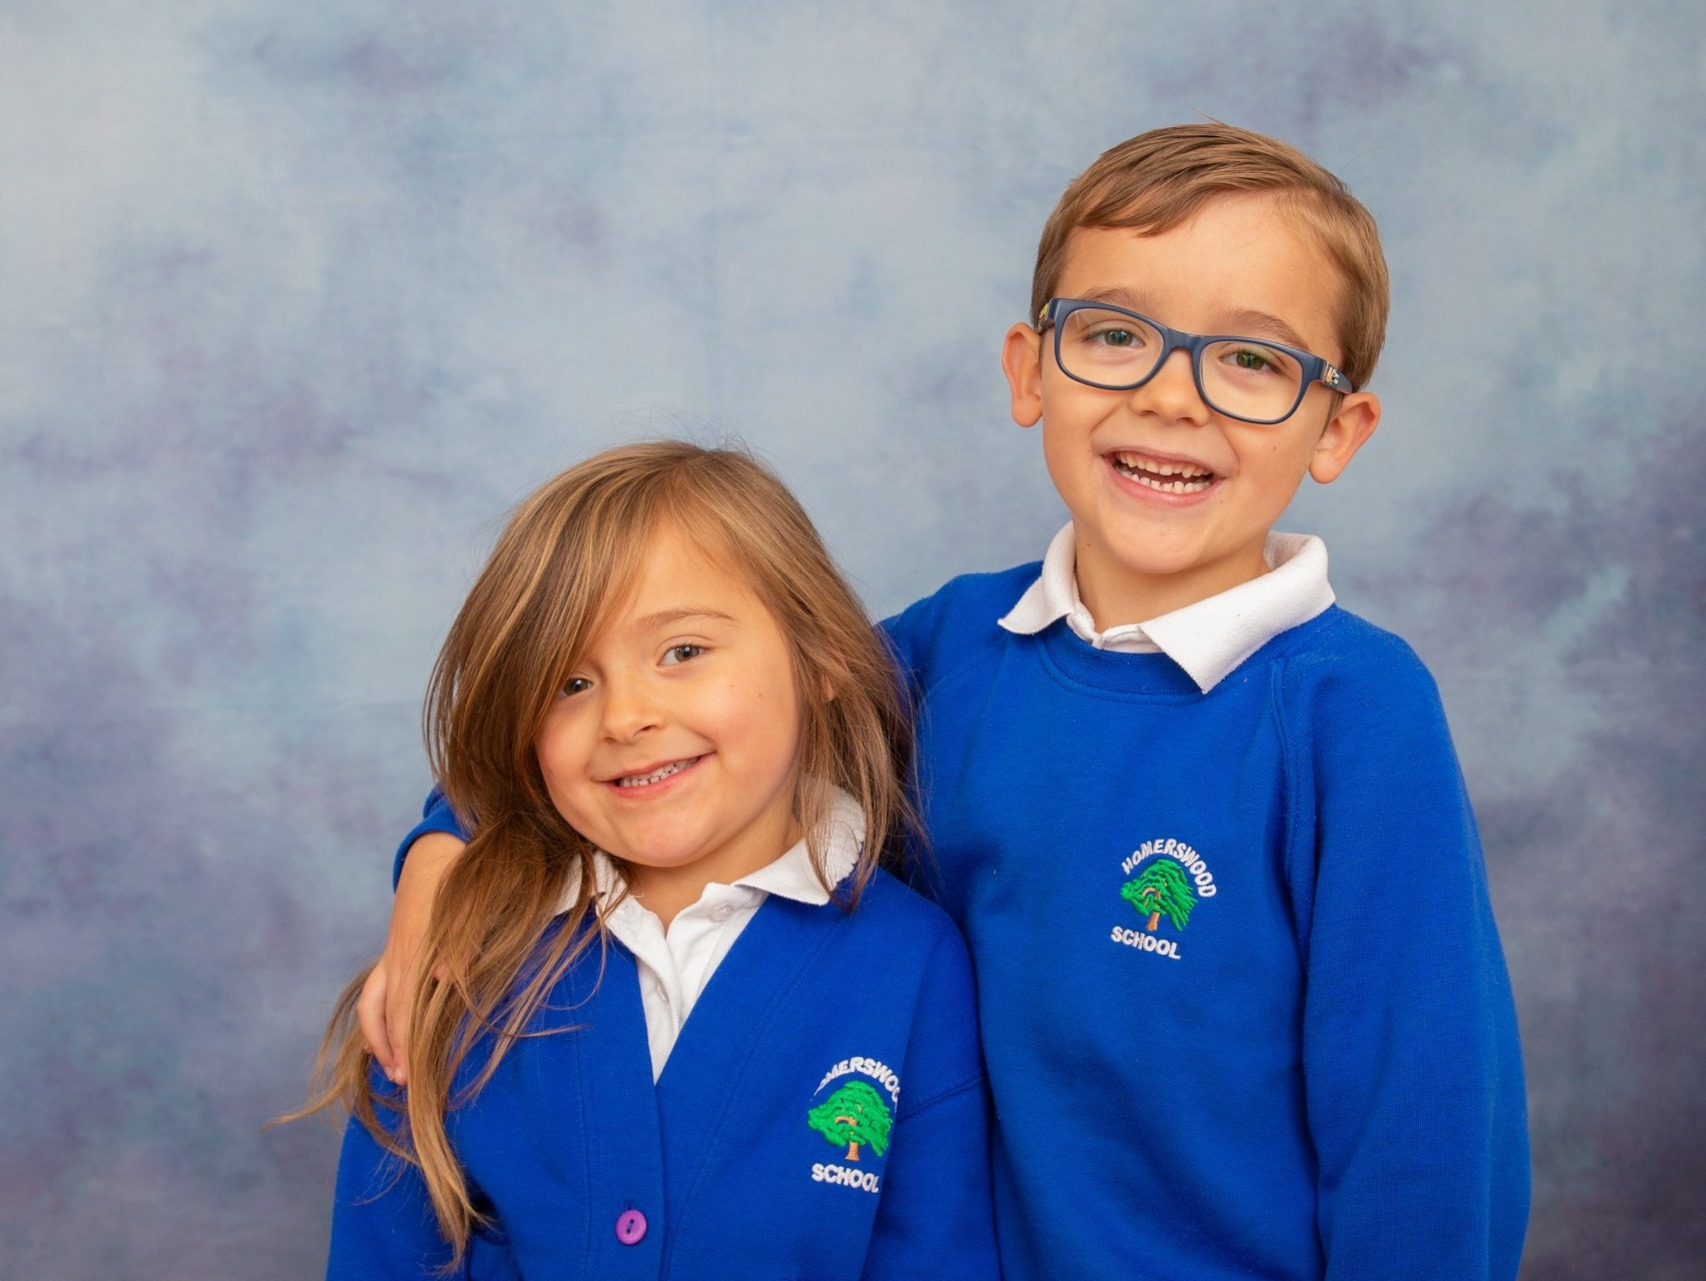 Siblings primary school photograph Homerswood, Welwyn Garden City